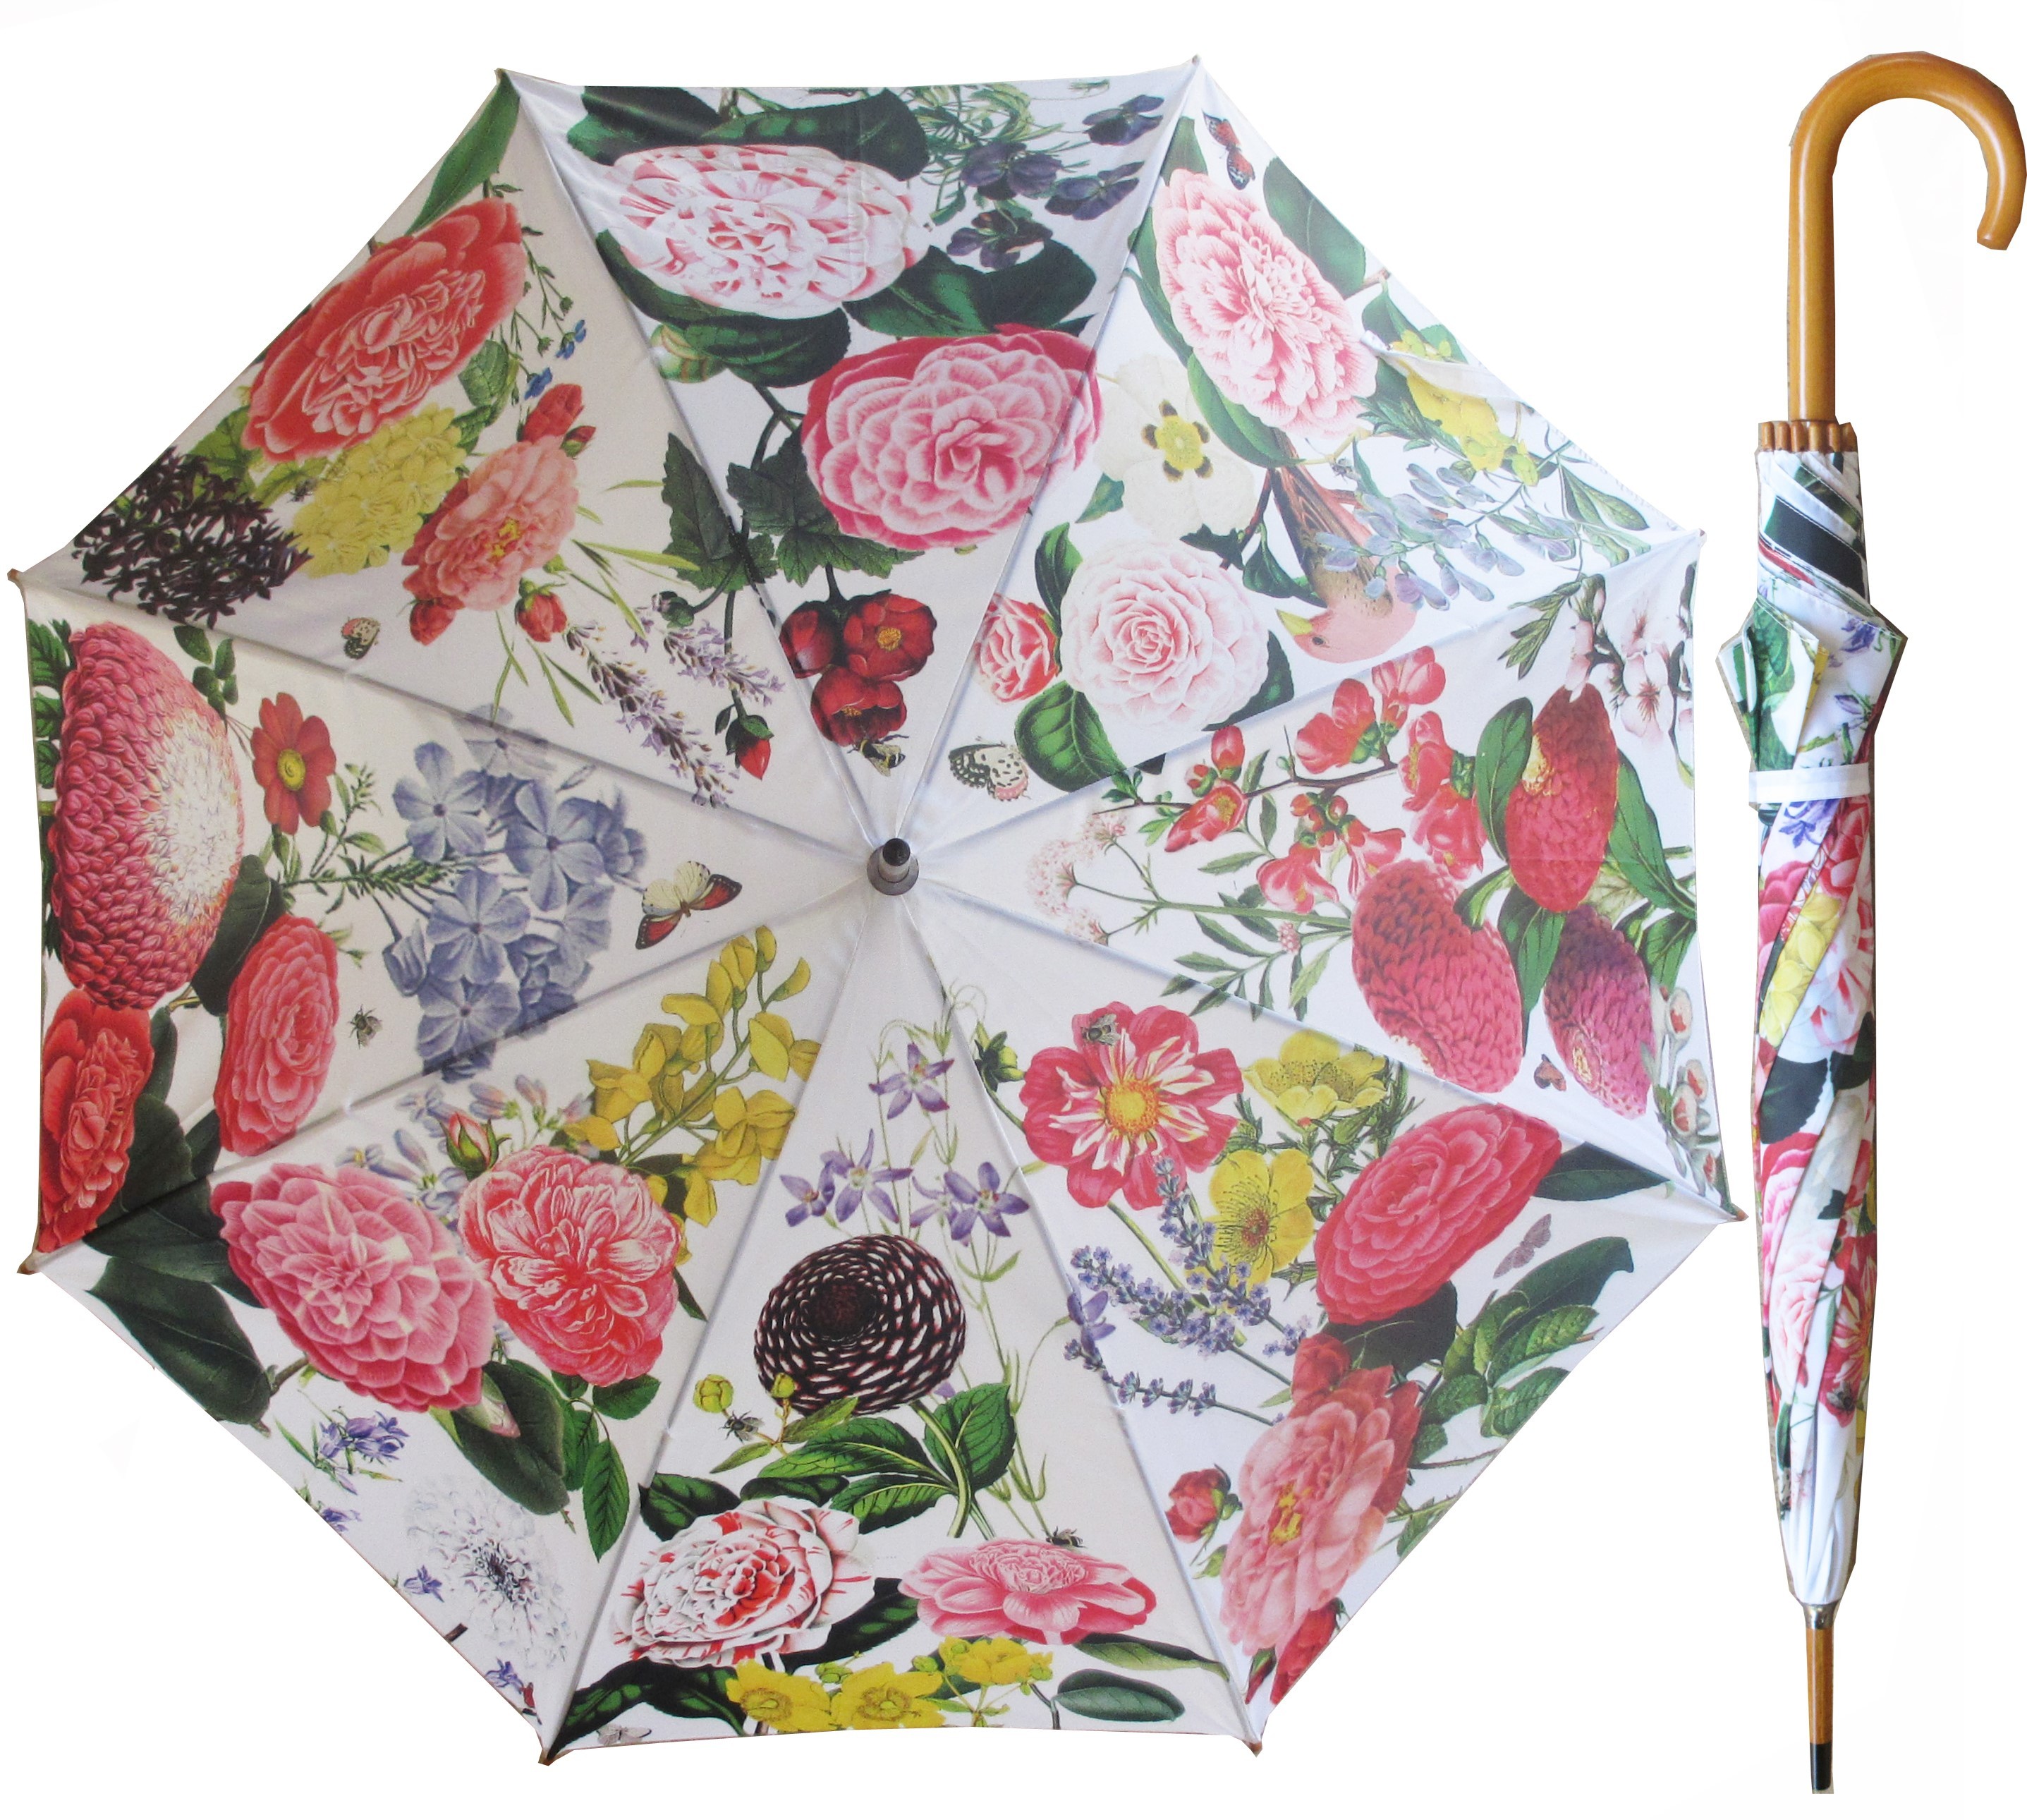 Beautiful bright flowers make this umbrella fun